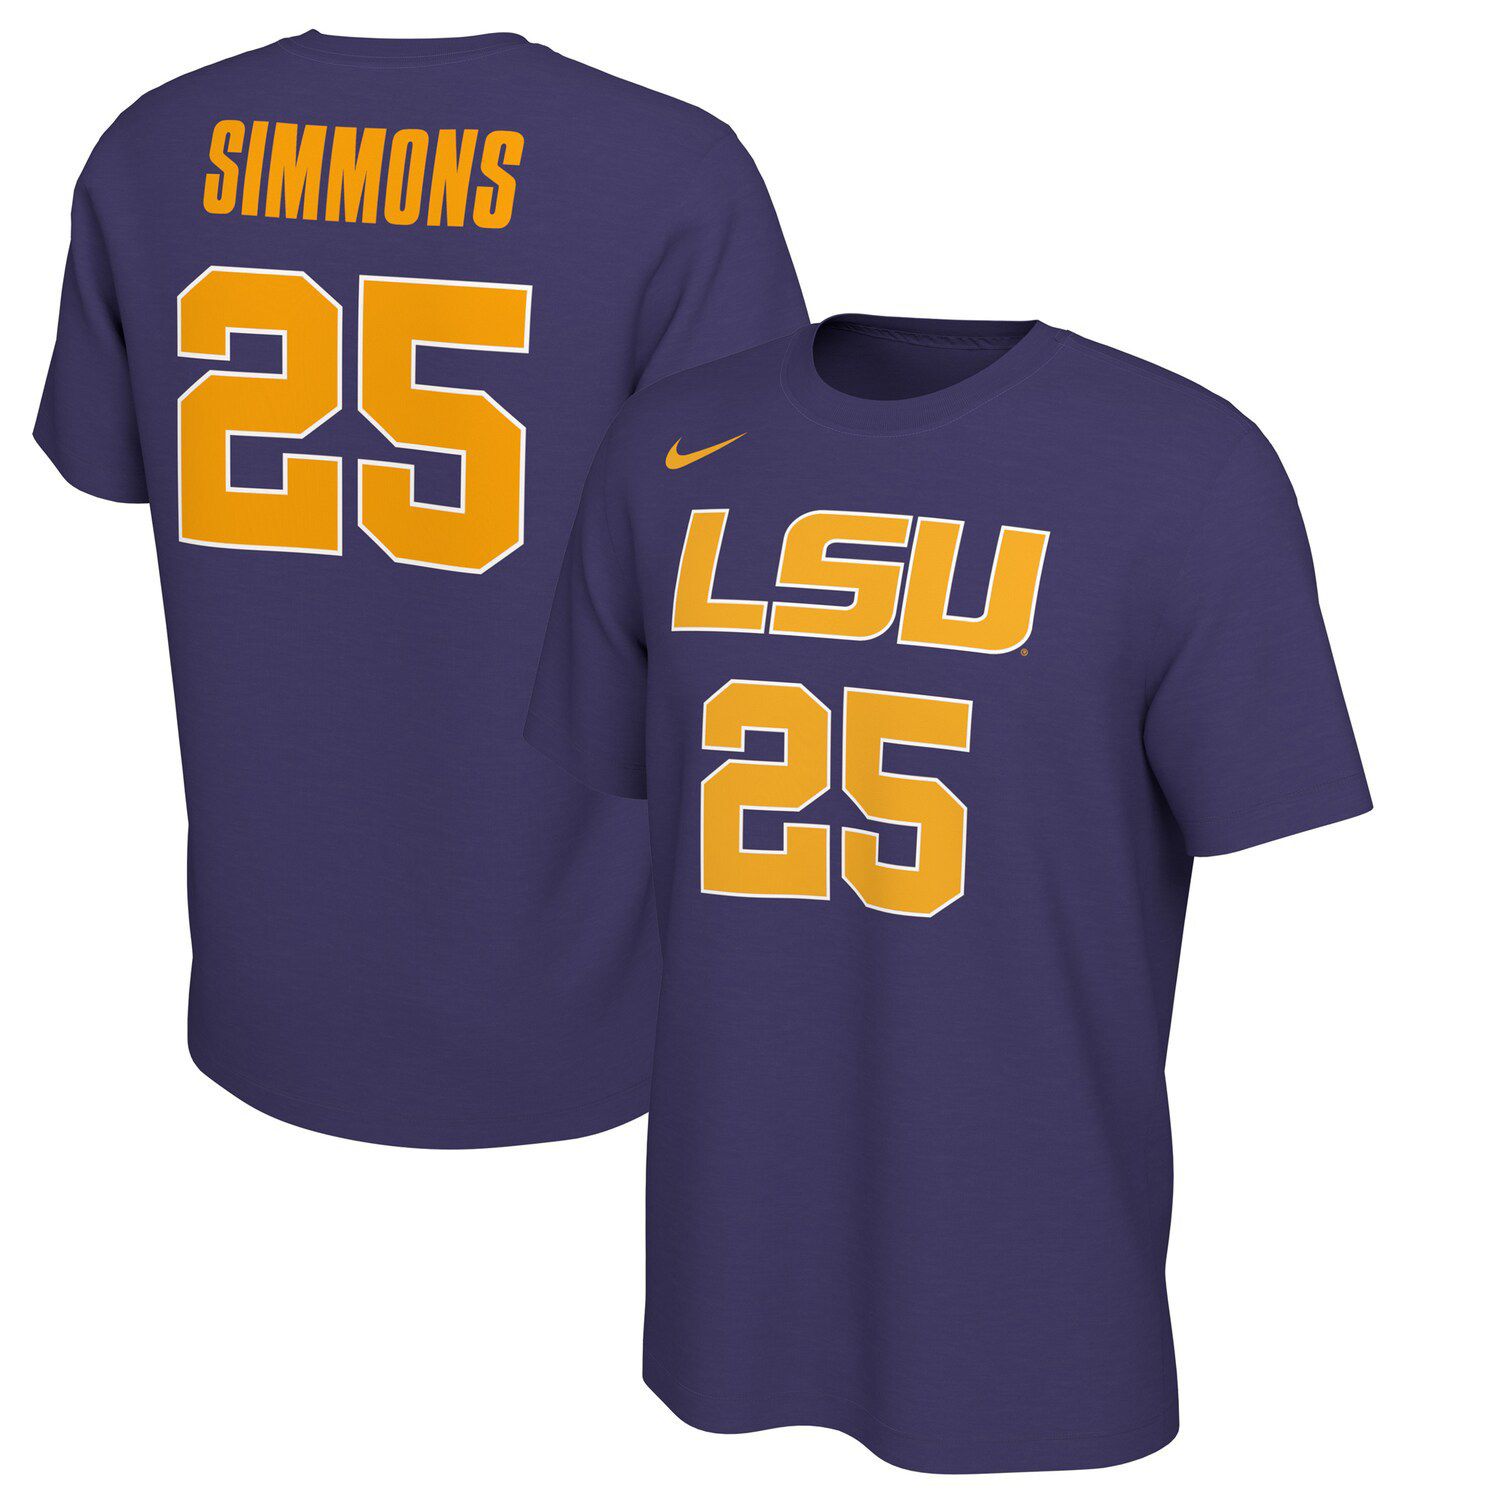 Houston Astros, Shirts, Houston Astros Alex Bregman Purple Lsu Unisex  Jersey Size Xl